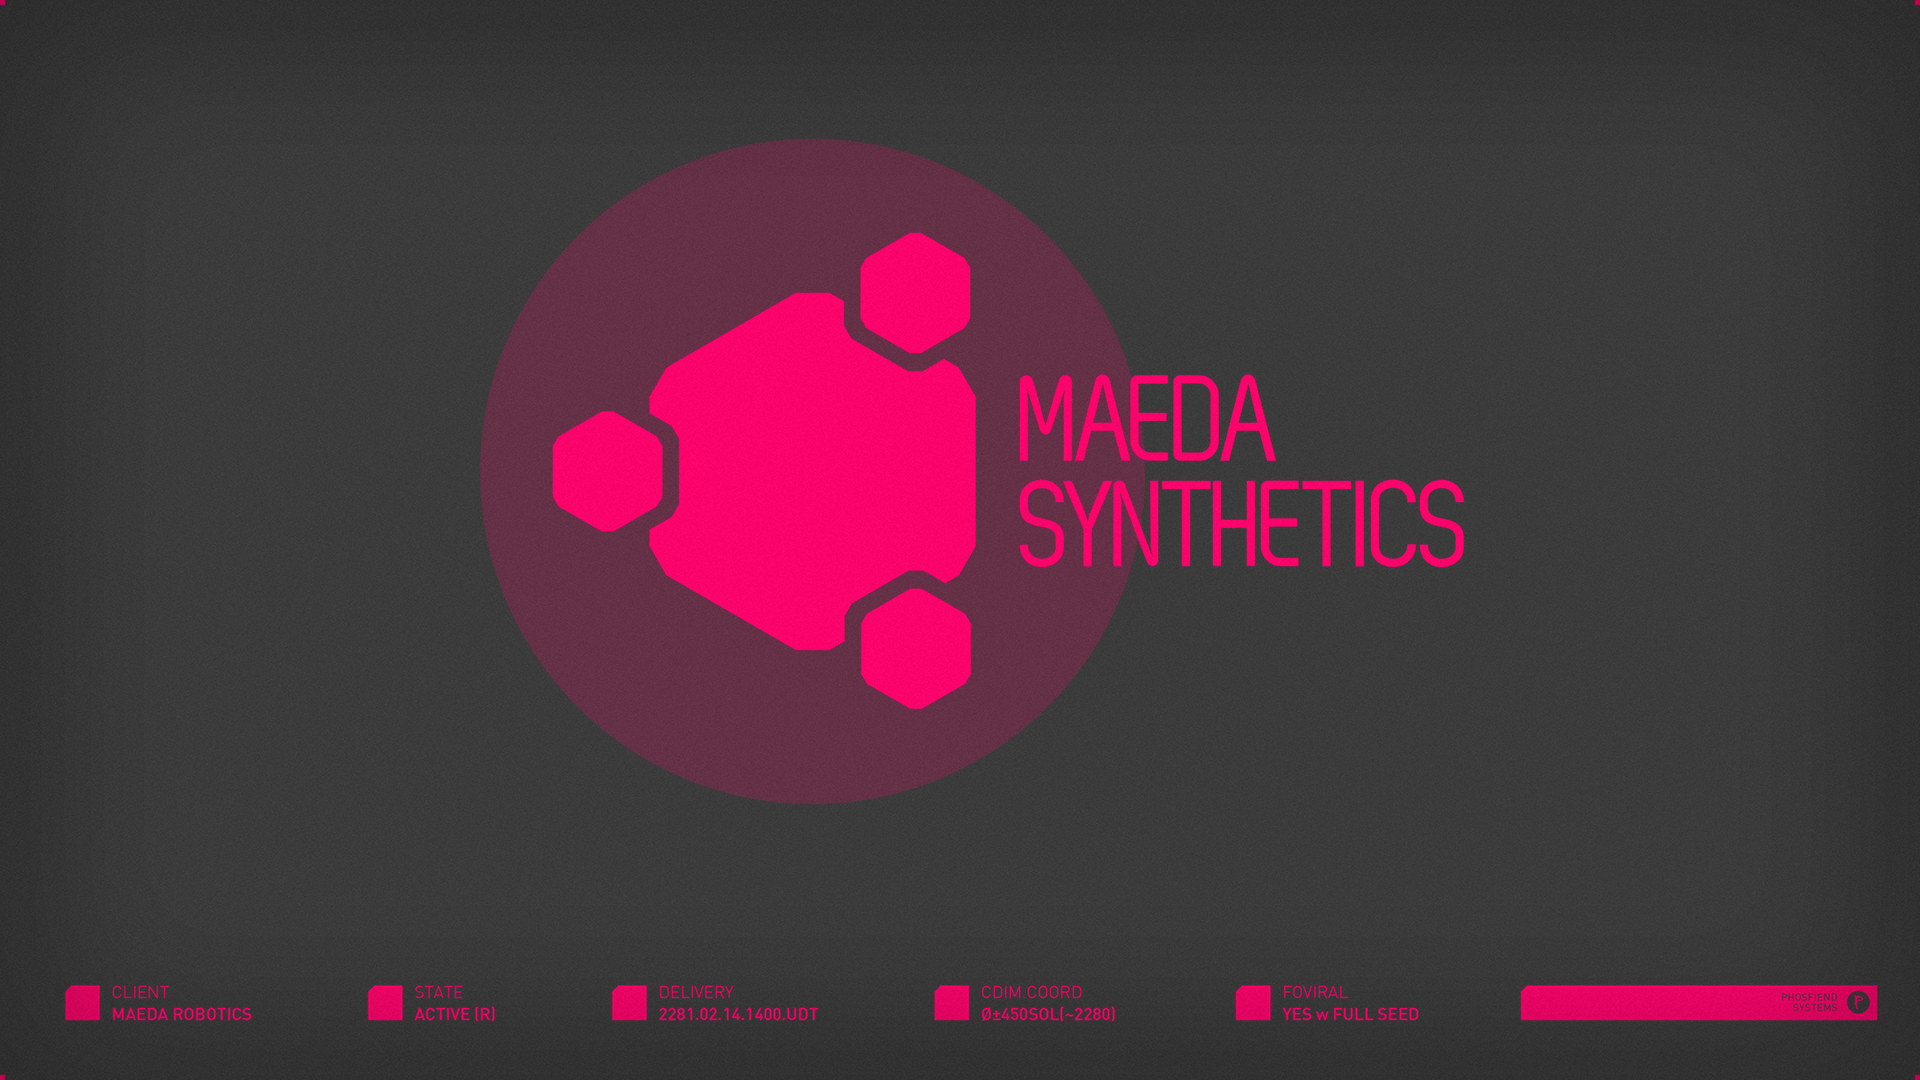  Maeda Synthetics | circa 2281 